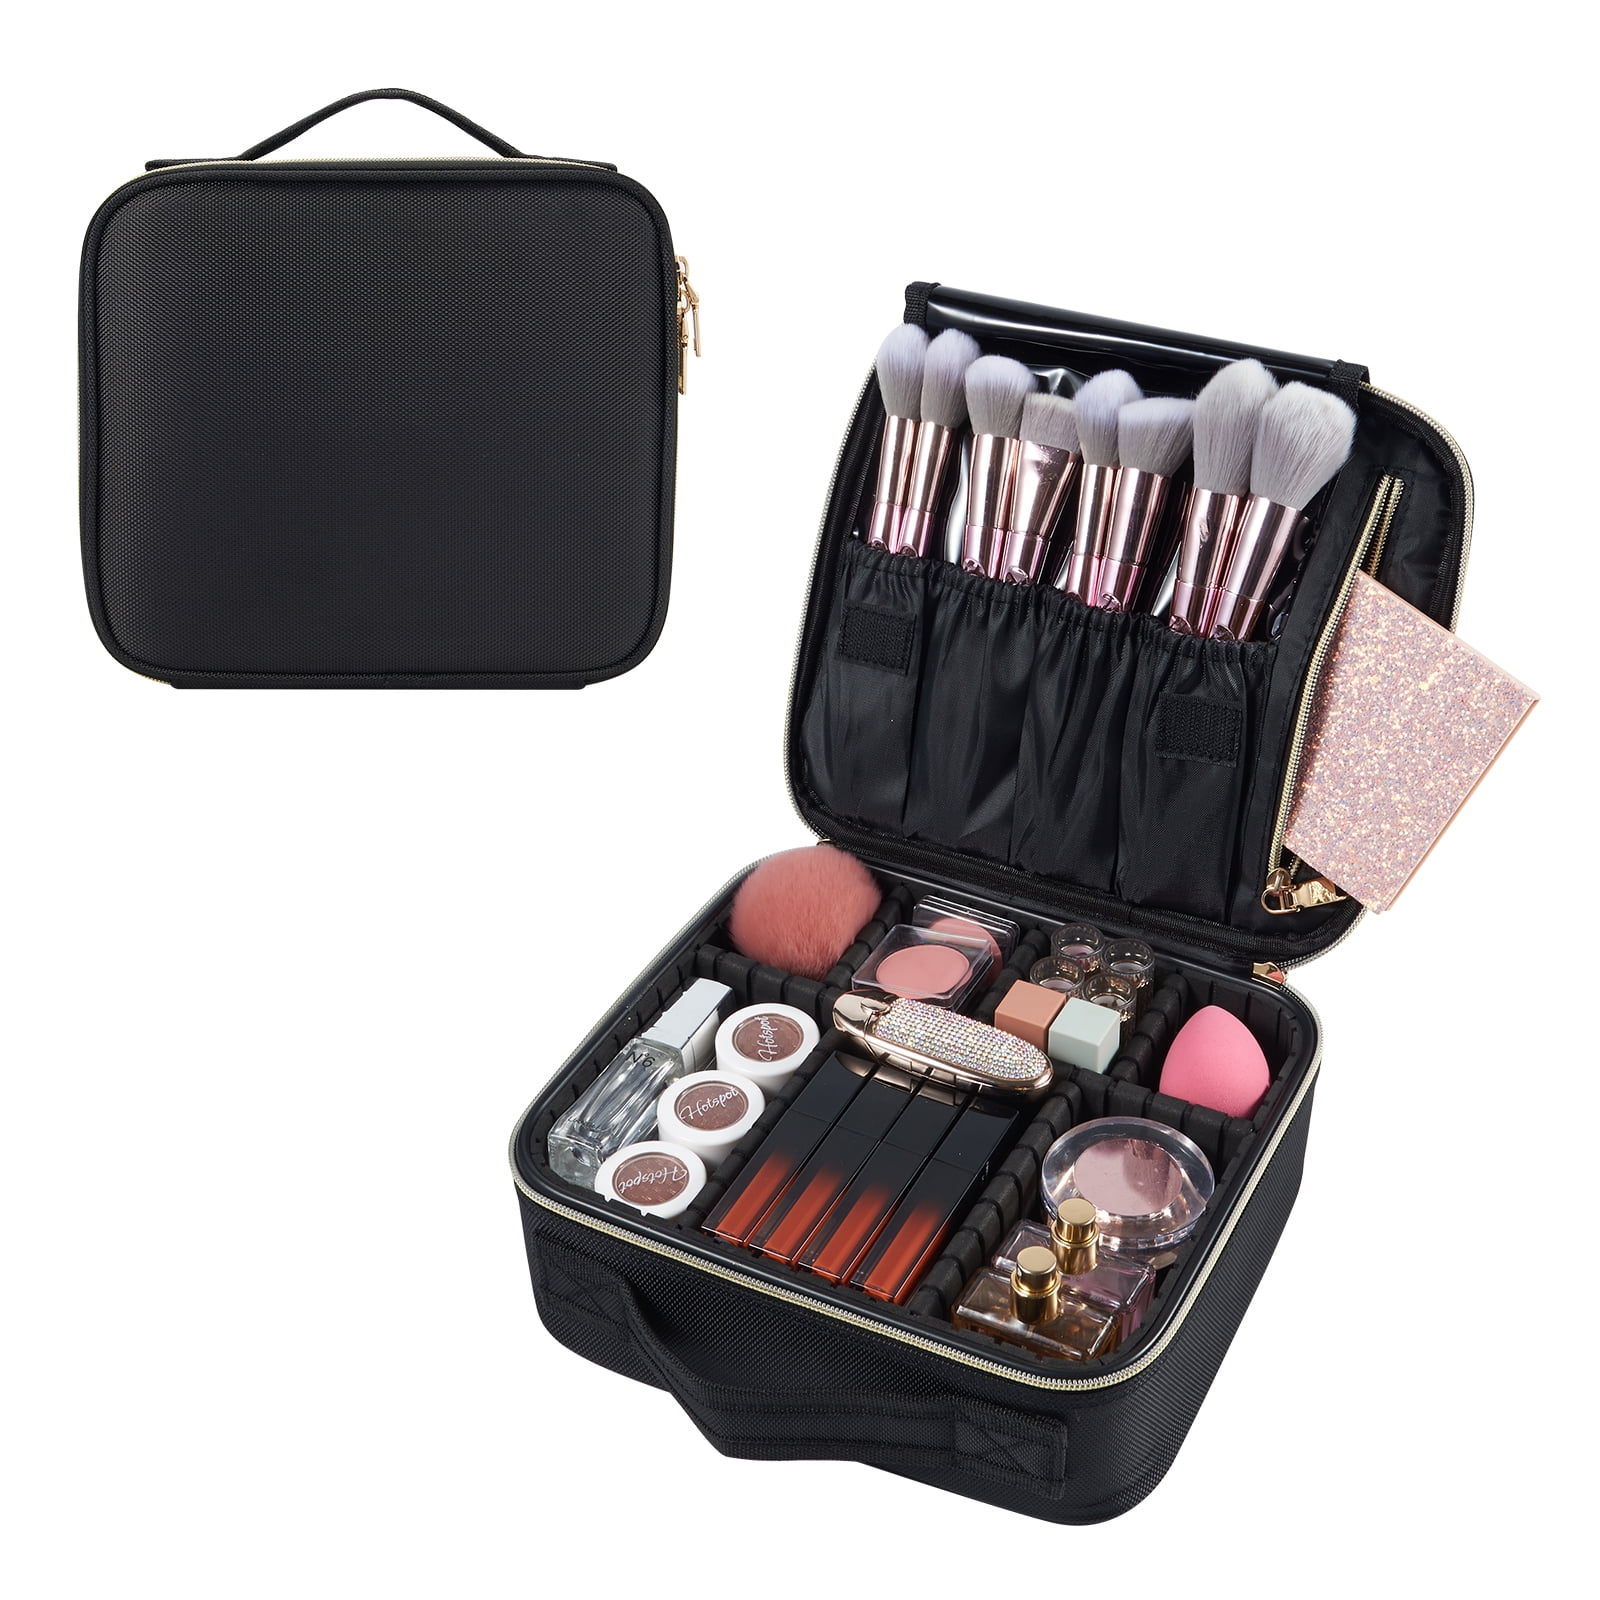 Joligrace Travel Makeup Bag Organizer Large Makeup Case with Dividers Cosmetic Train Case Toiletry - Walmart.com